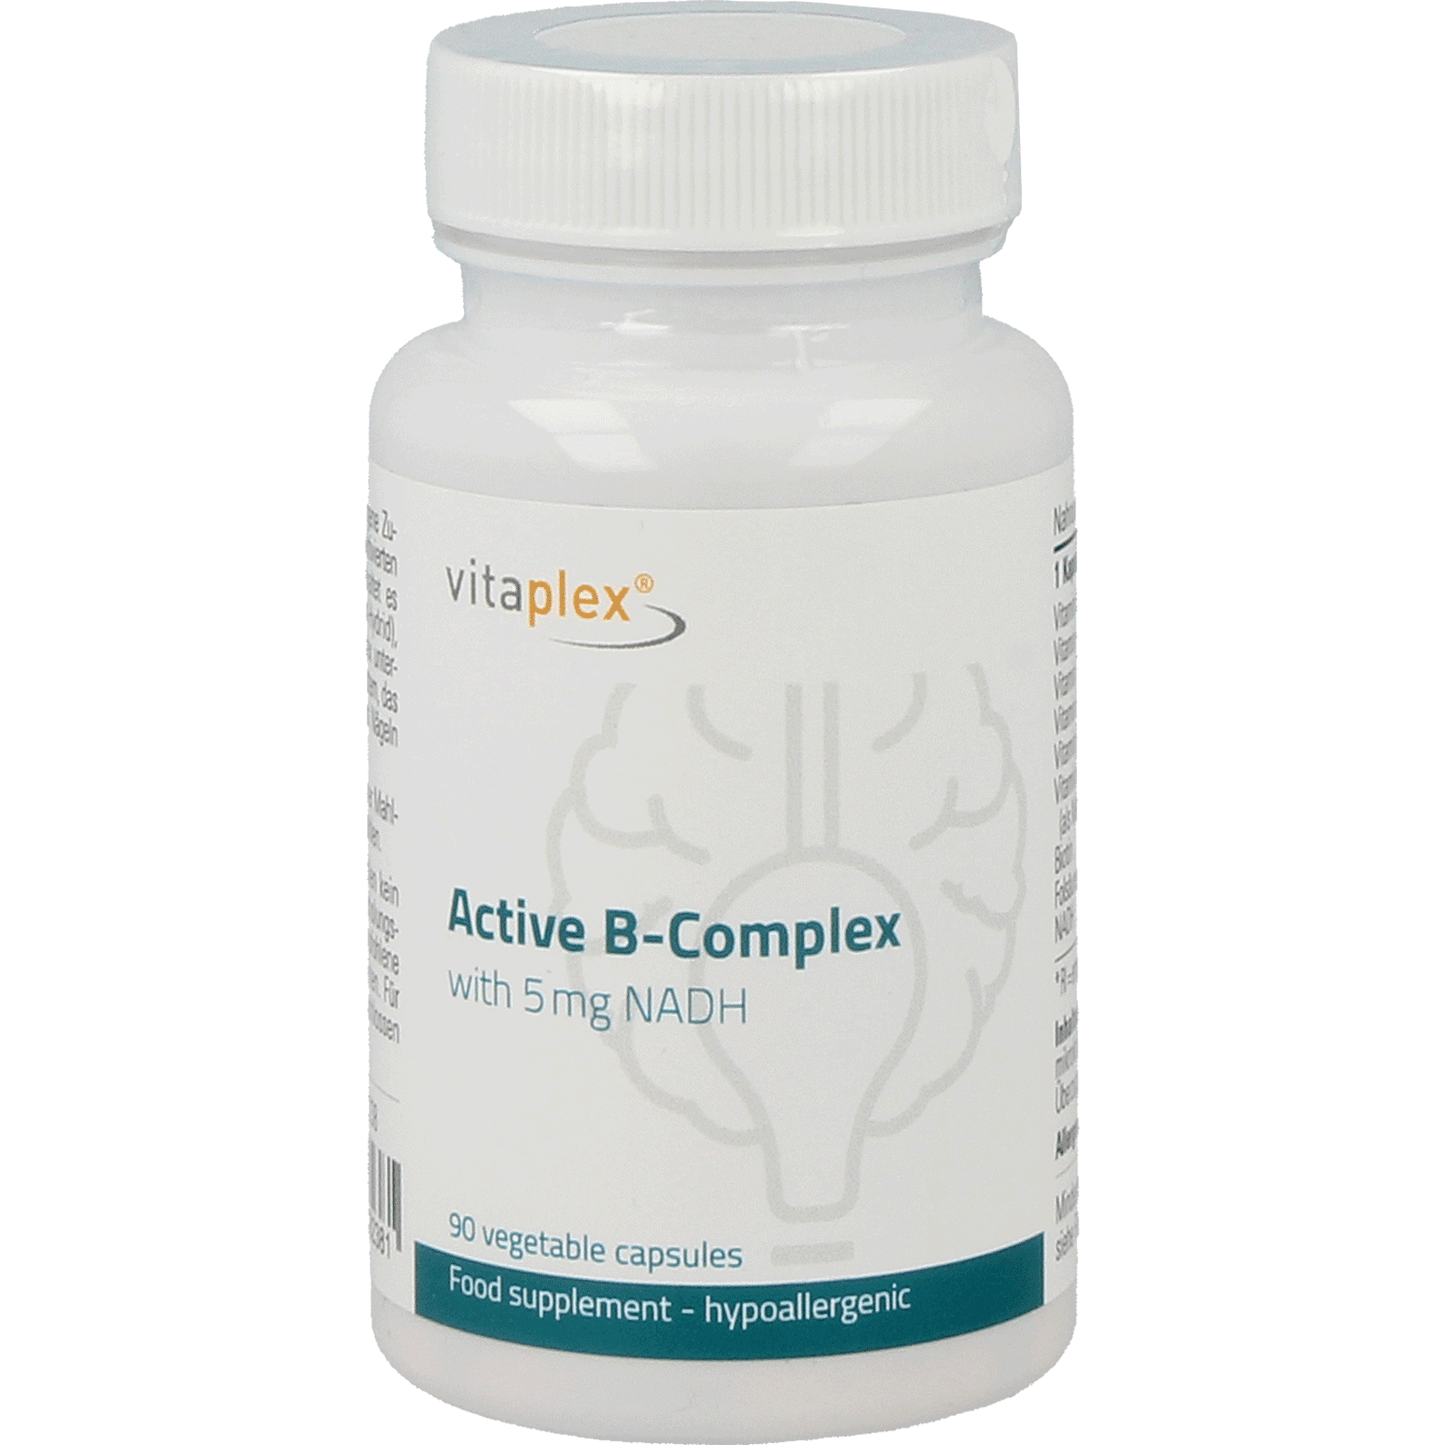 Active B-Complex - littlehealthstore